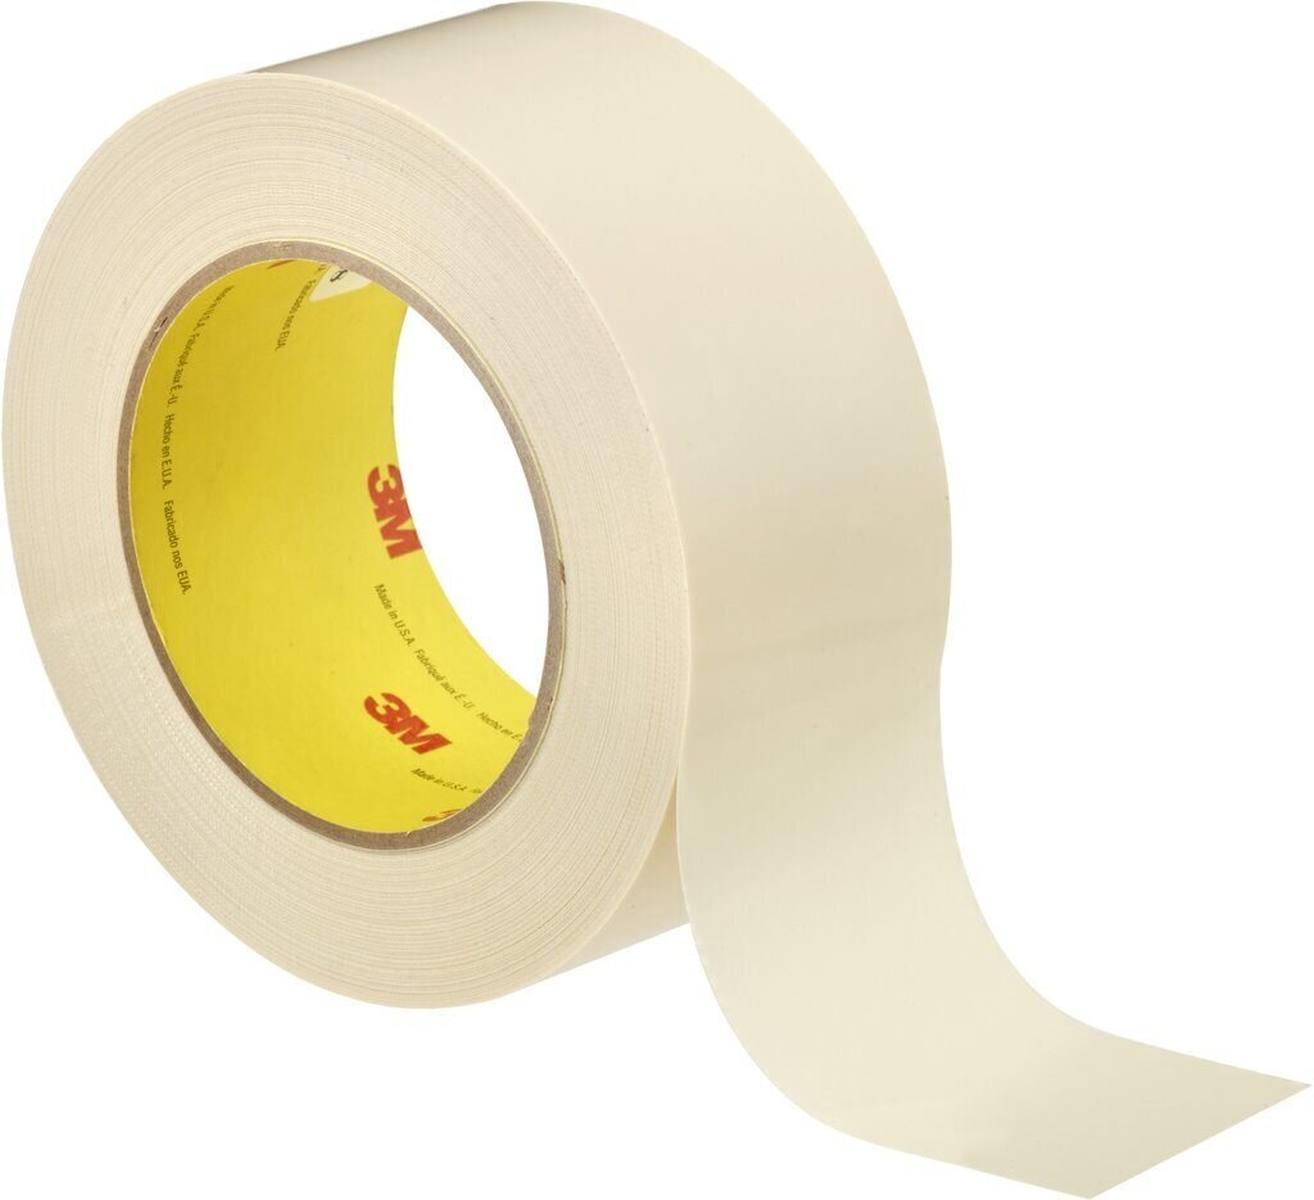 Buy 3M Premium fabric adhesive tape 389